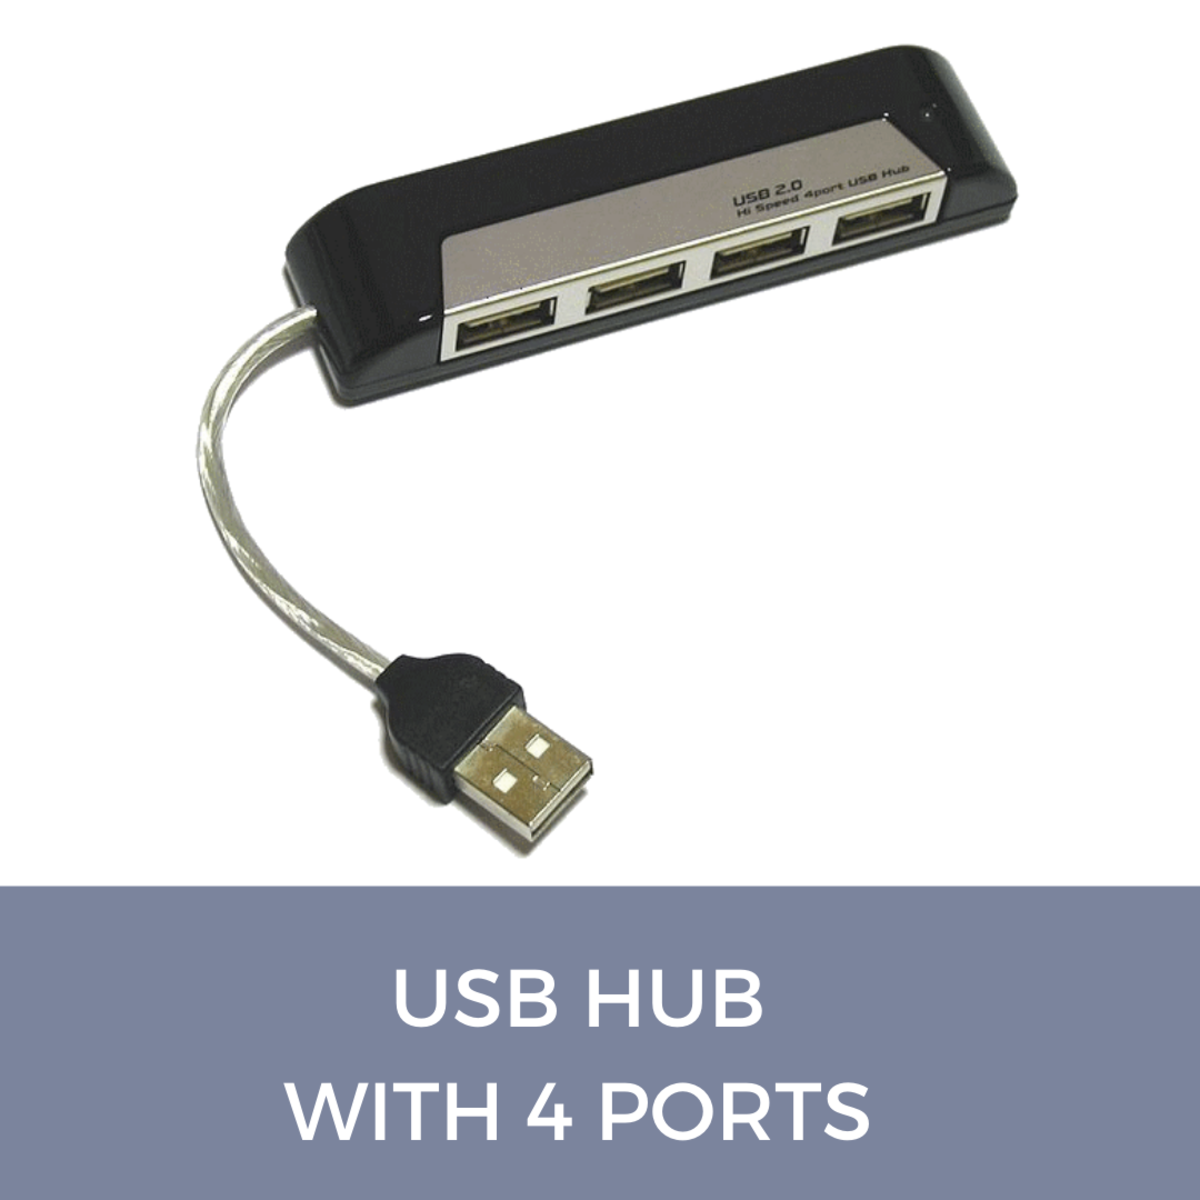 USB Hub with 4 ports